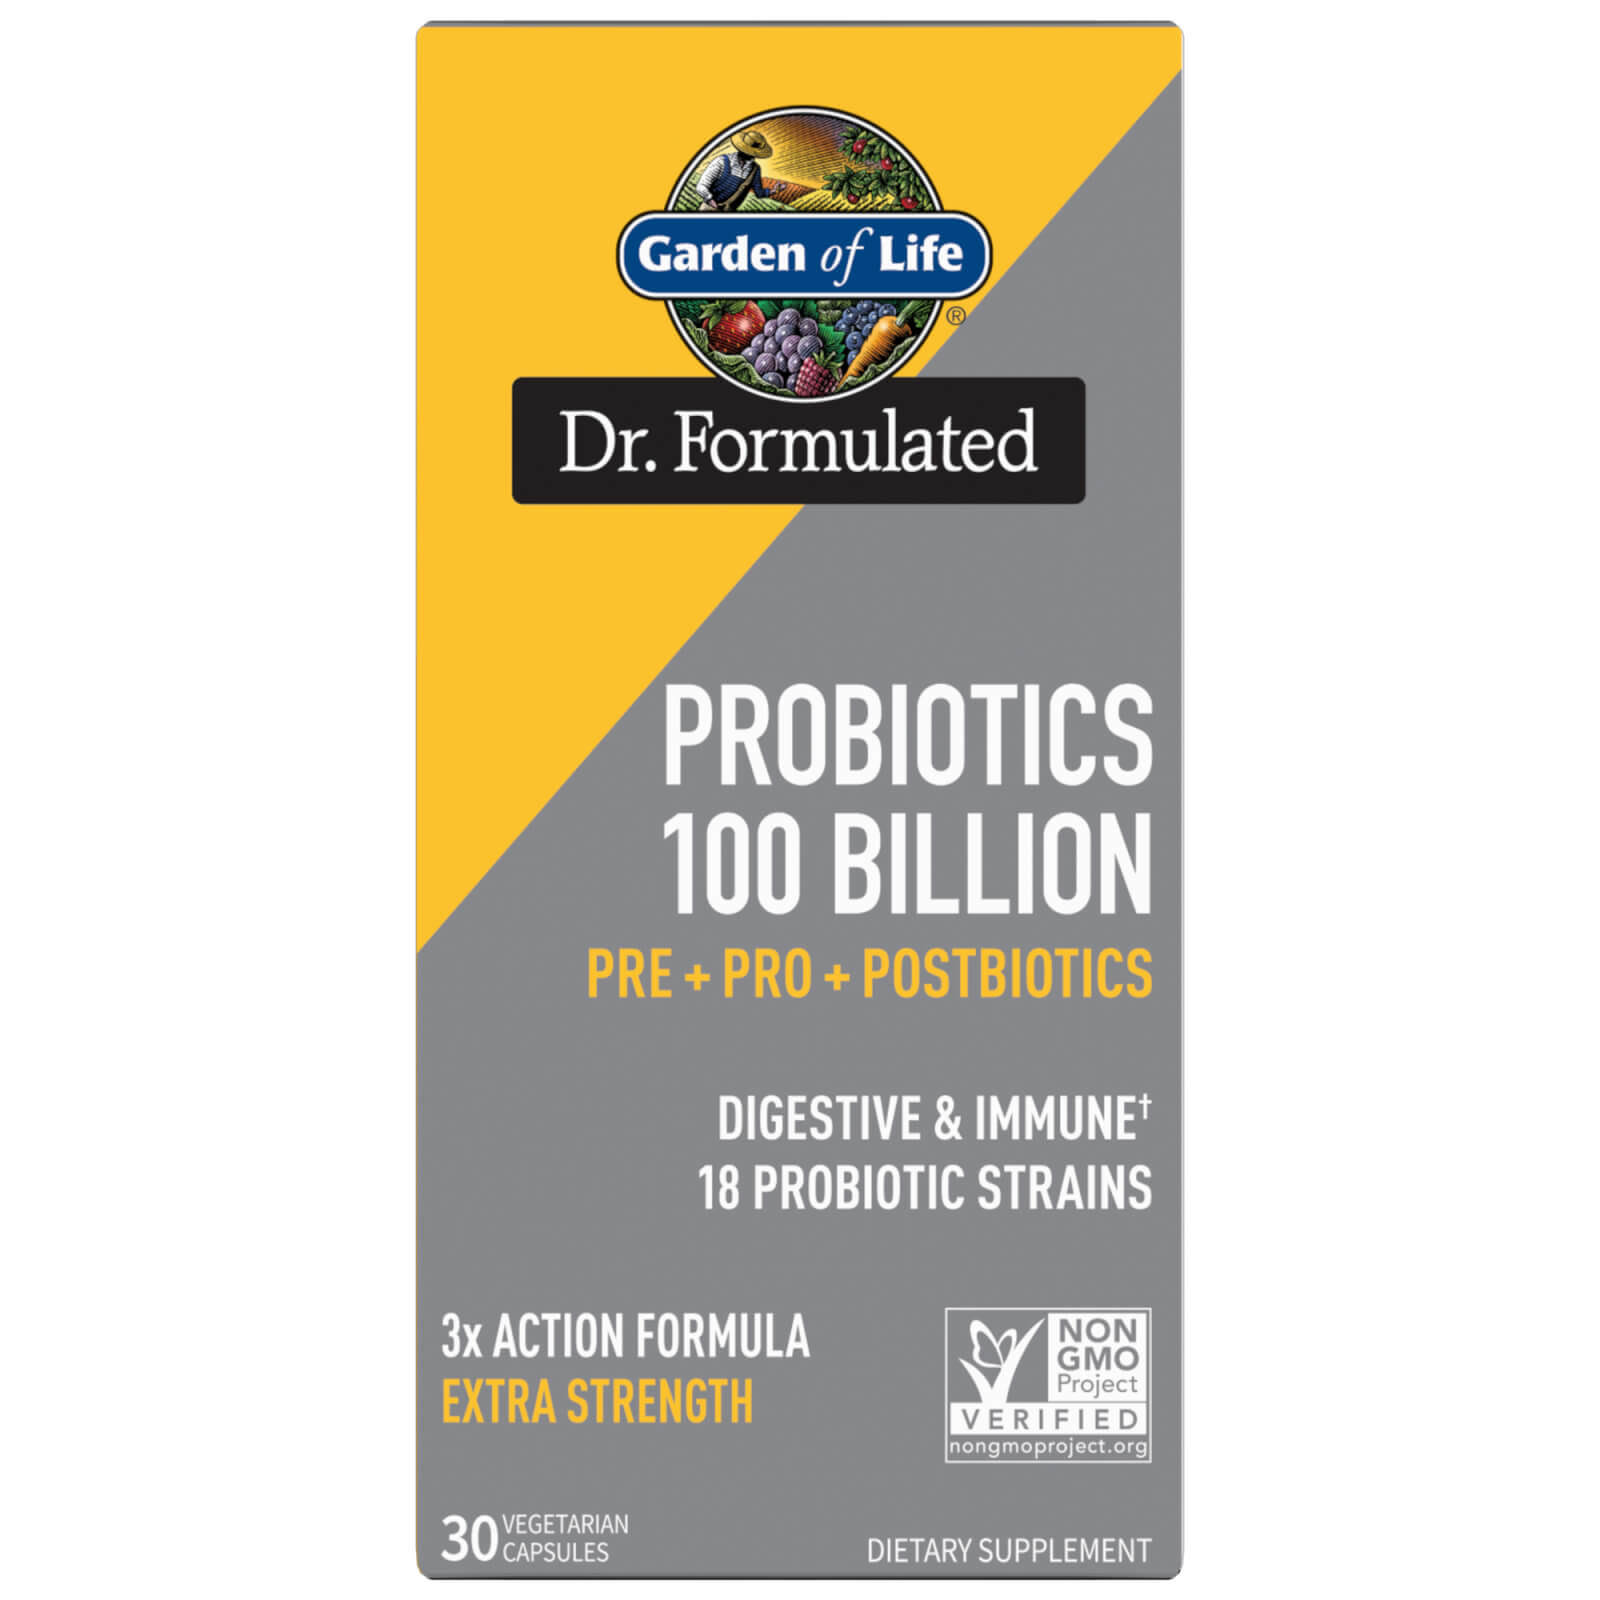 Dr. Formulated Microbiome 100B Pre+Pro+Postbiotics - Garden of Life